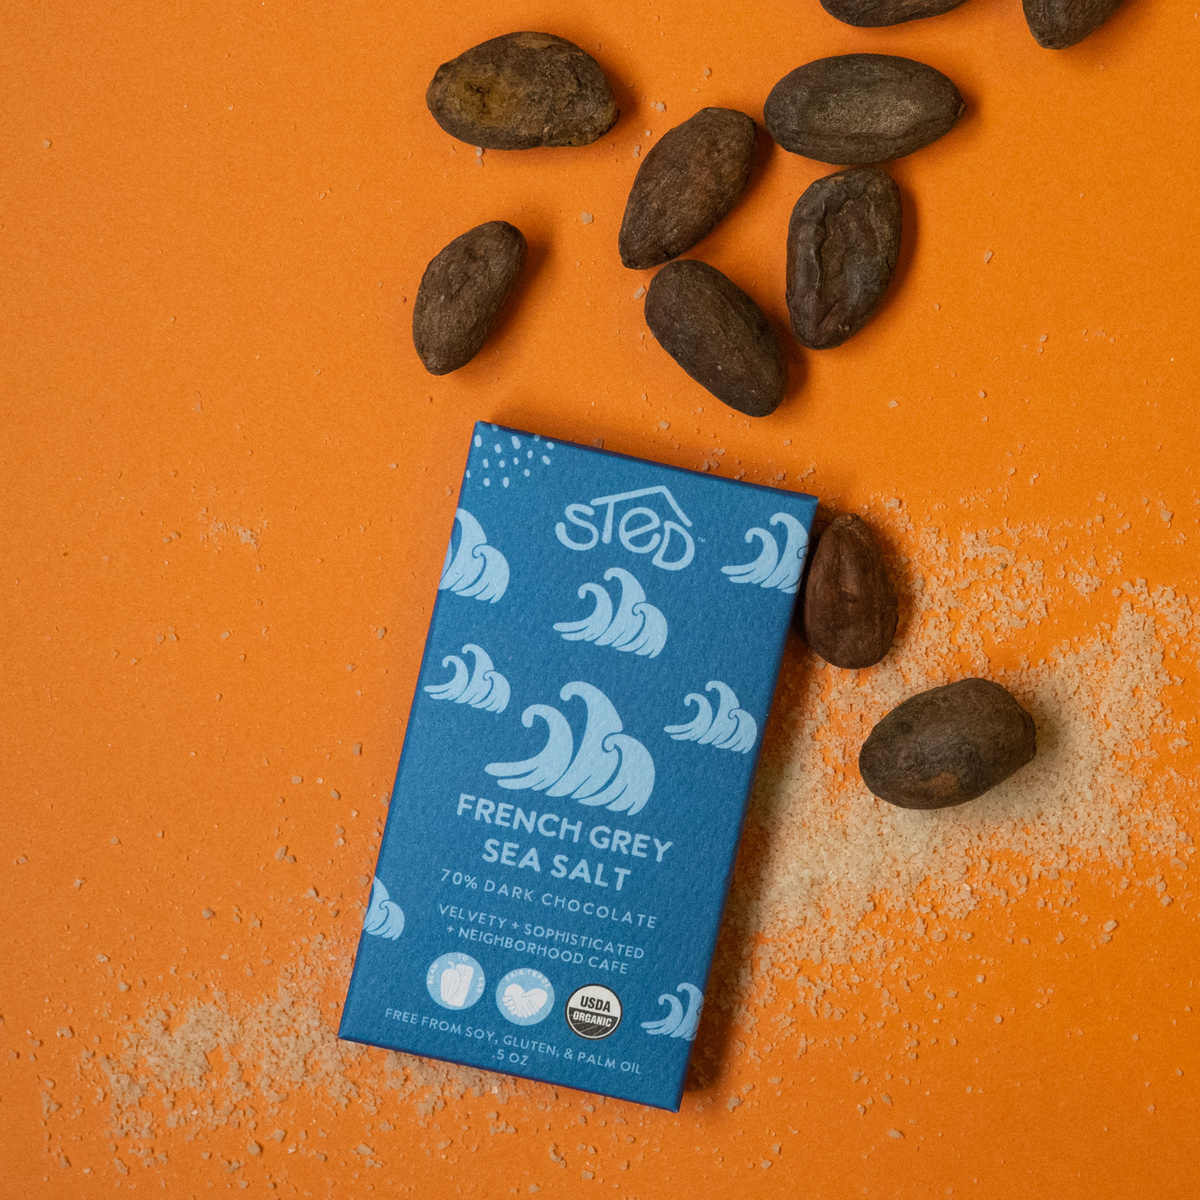 French Grey Sea Salt  :: 70% Dark Chocolate + Velvety +Sophisticated + Neighborhood Cafe